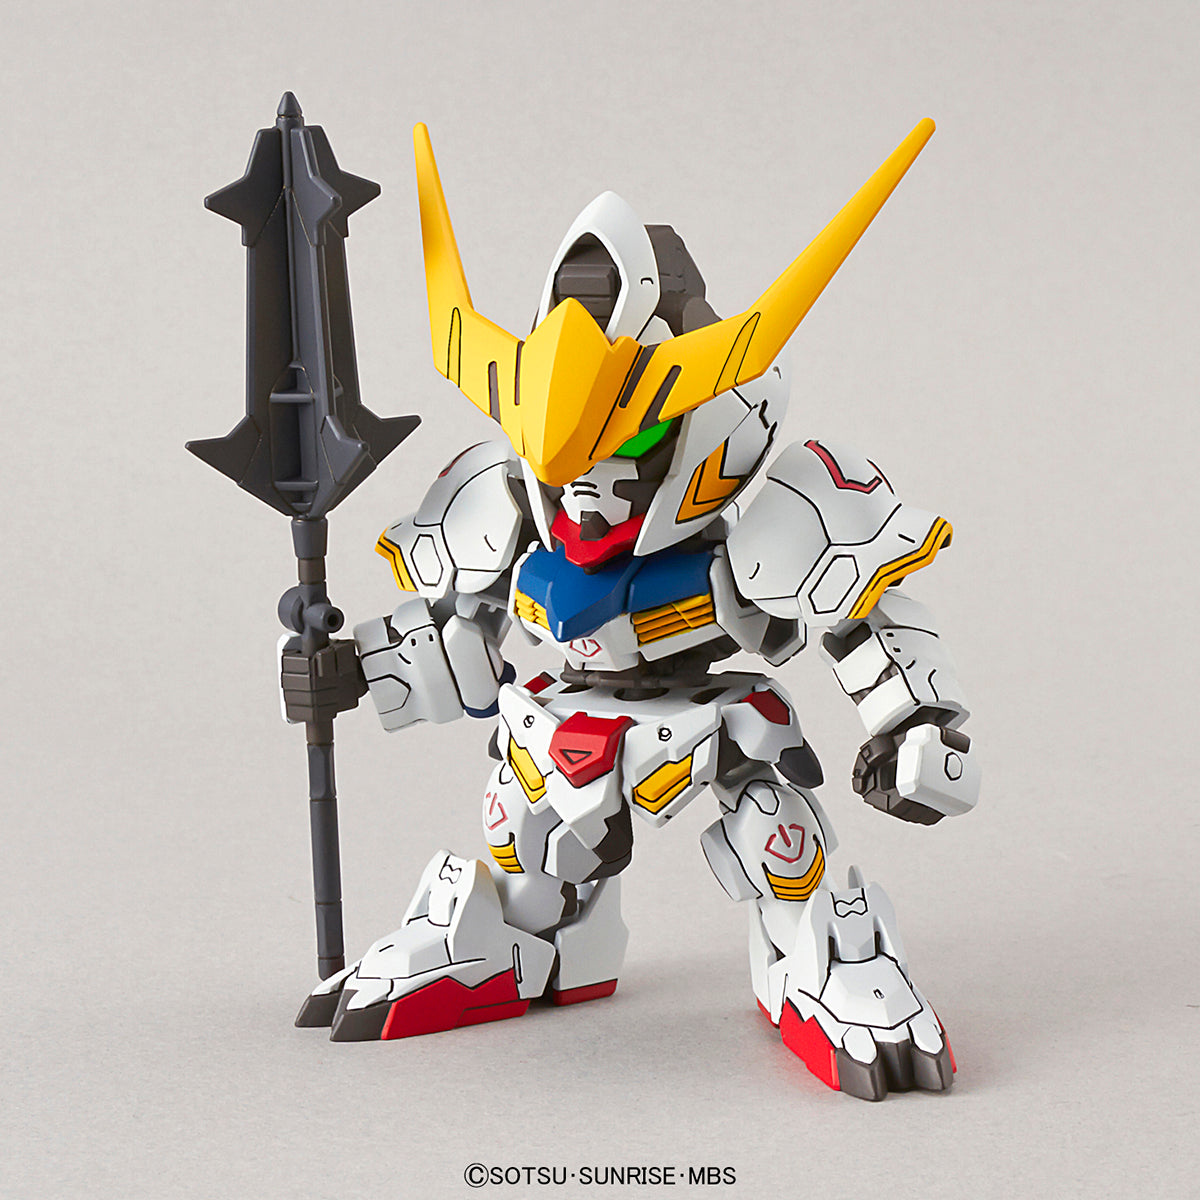 SD EX Standard - ASW-G-08 Gundam Barbatos